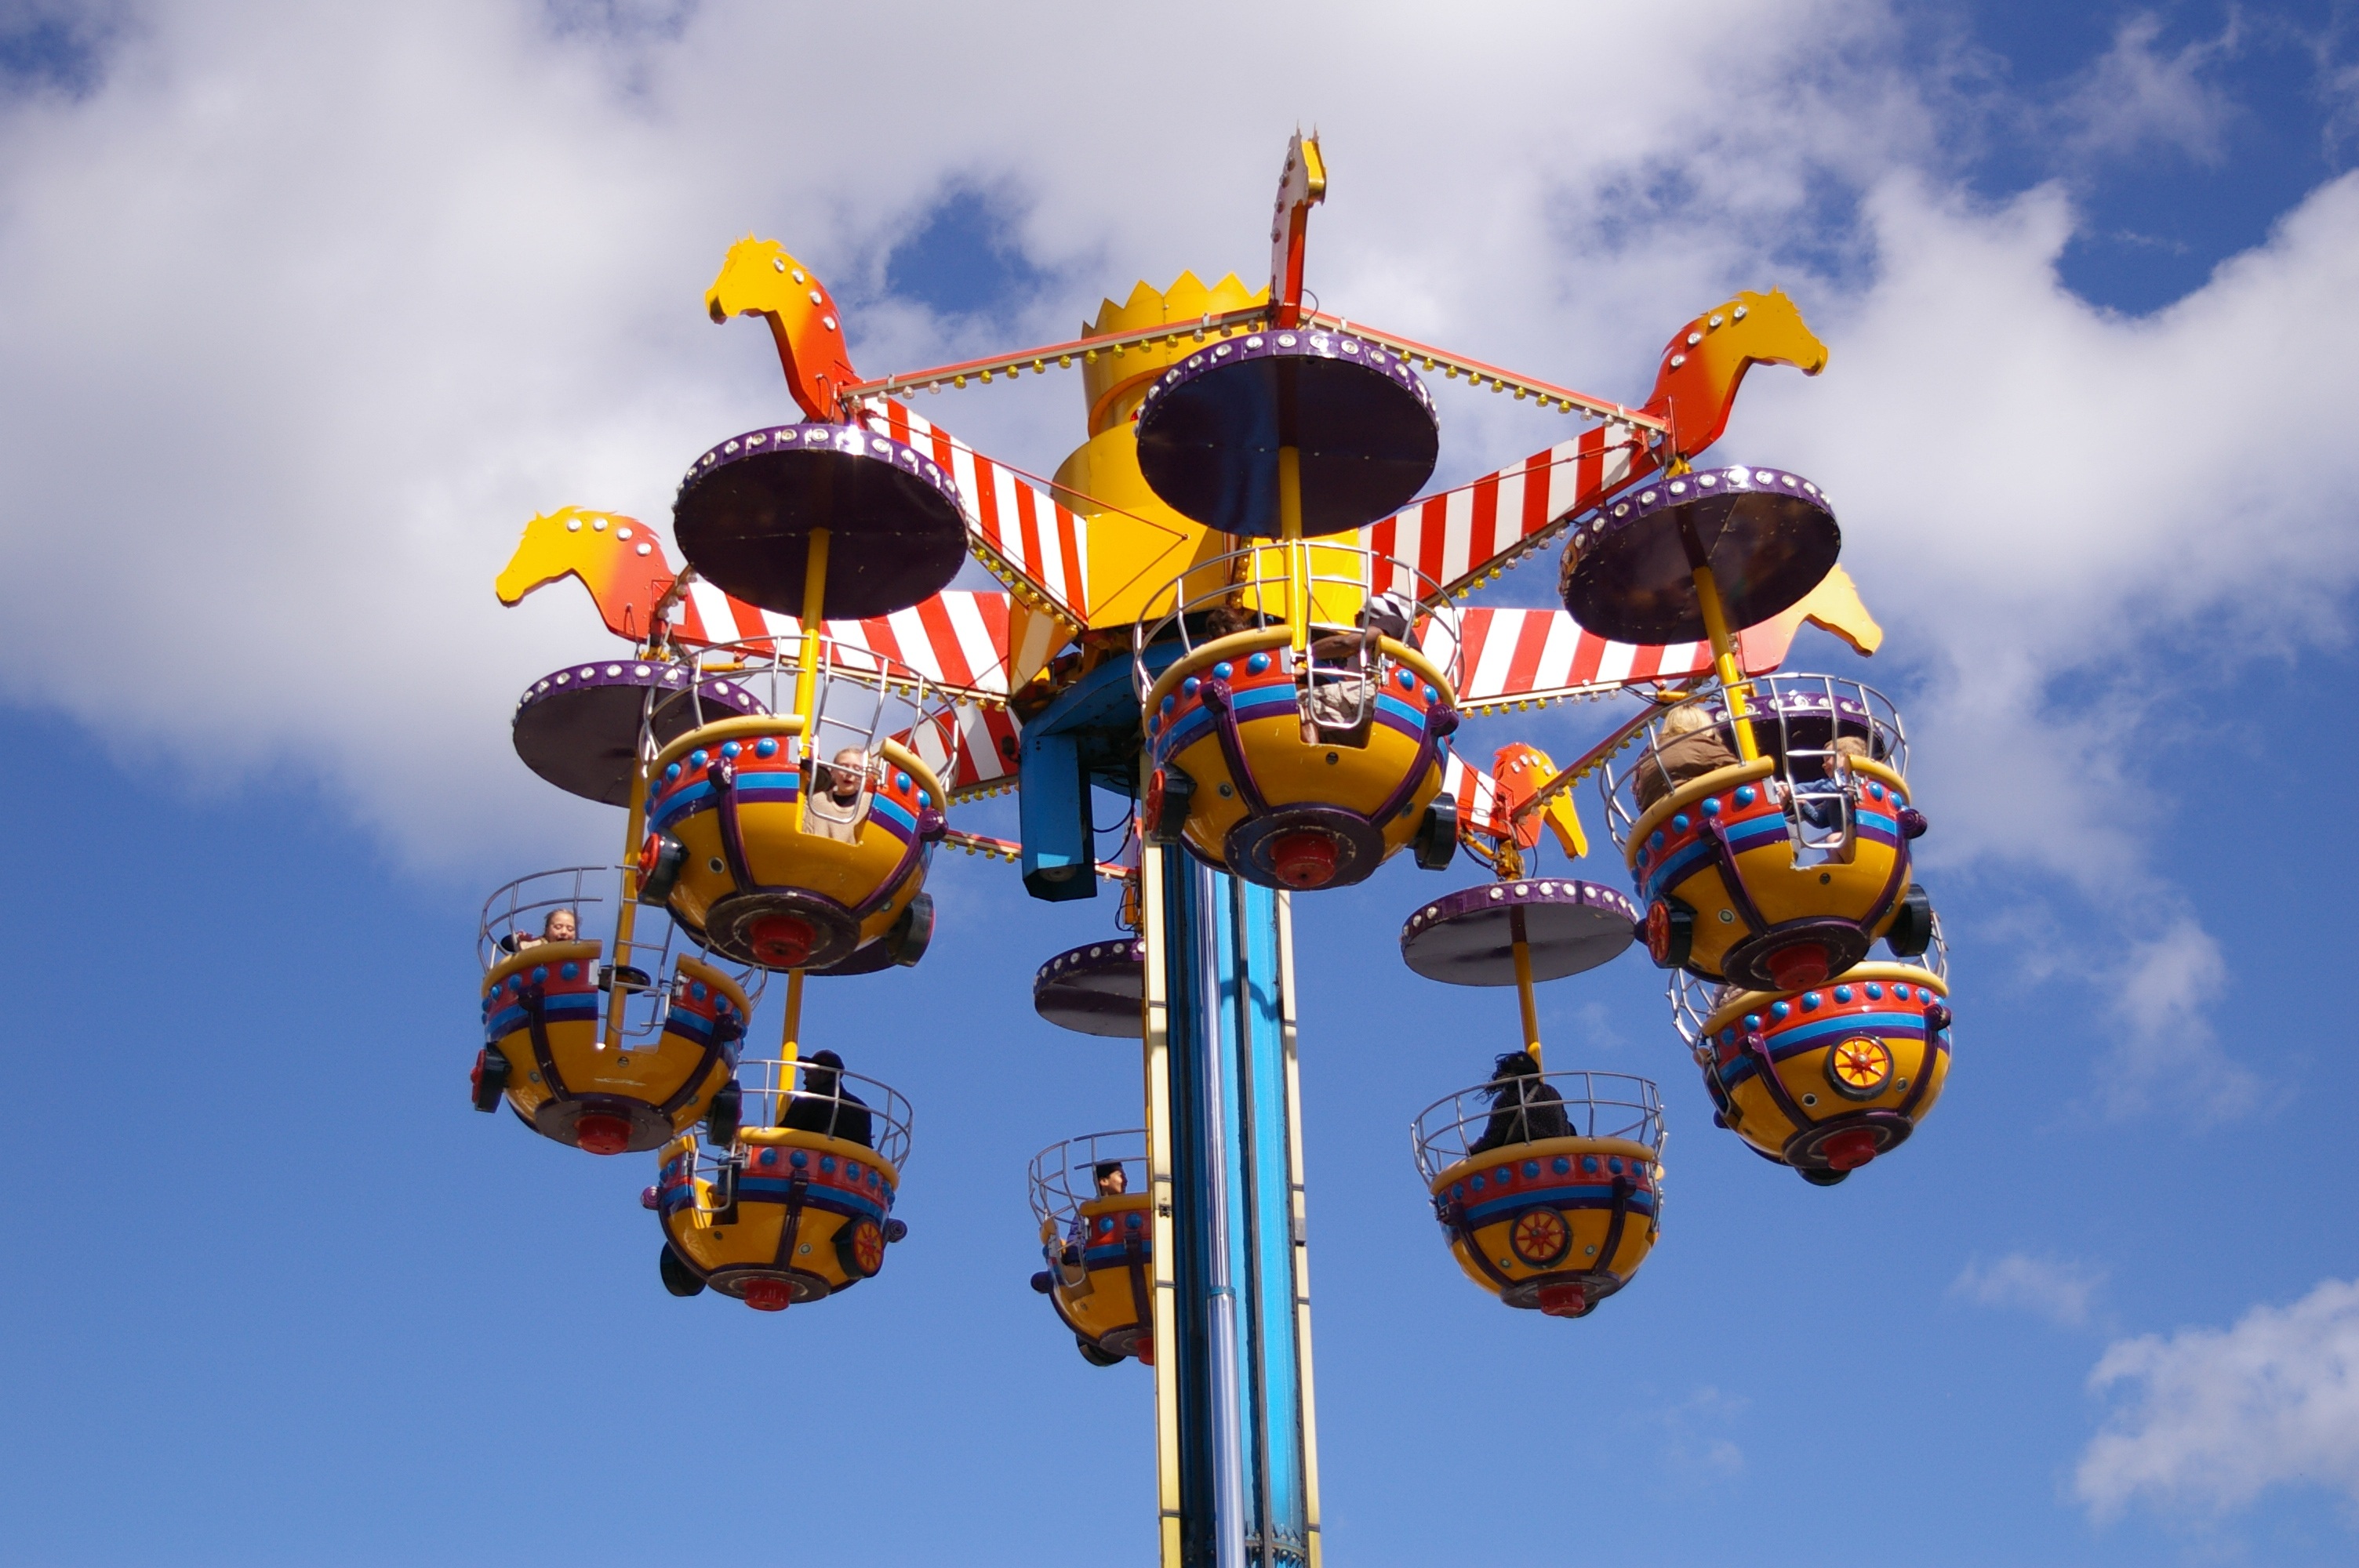 Amusement park ride, fun fair, funfair, colorful, summer, sunlight